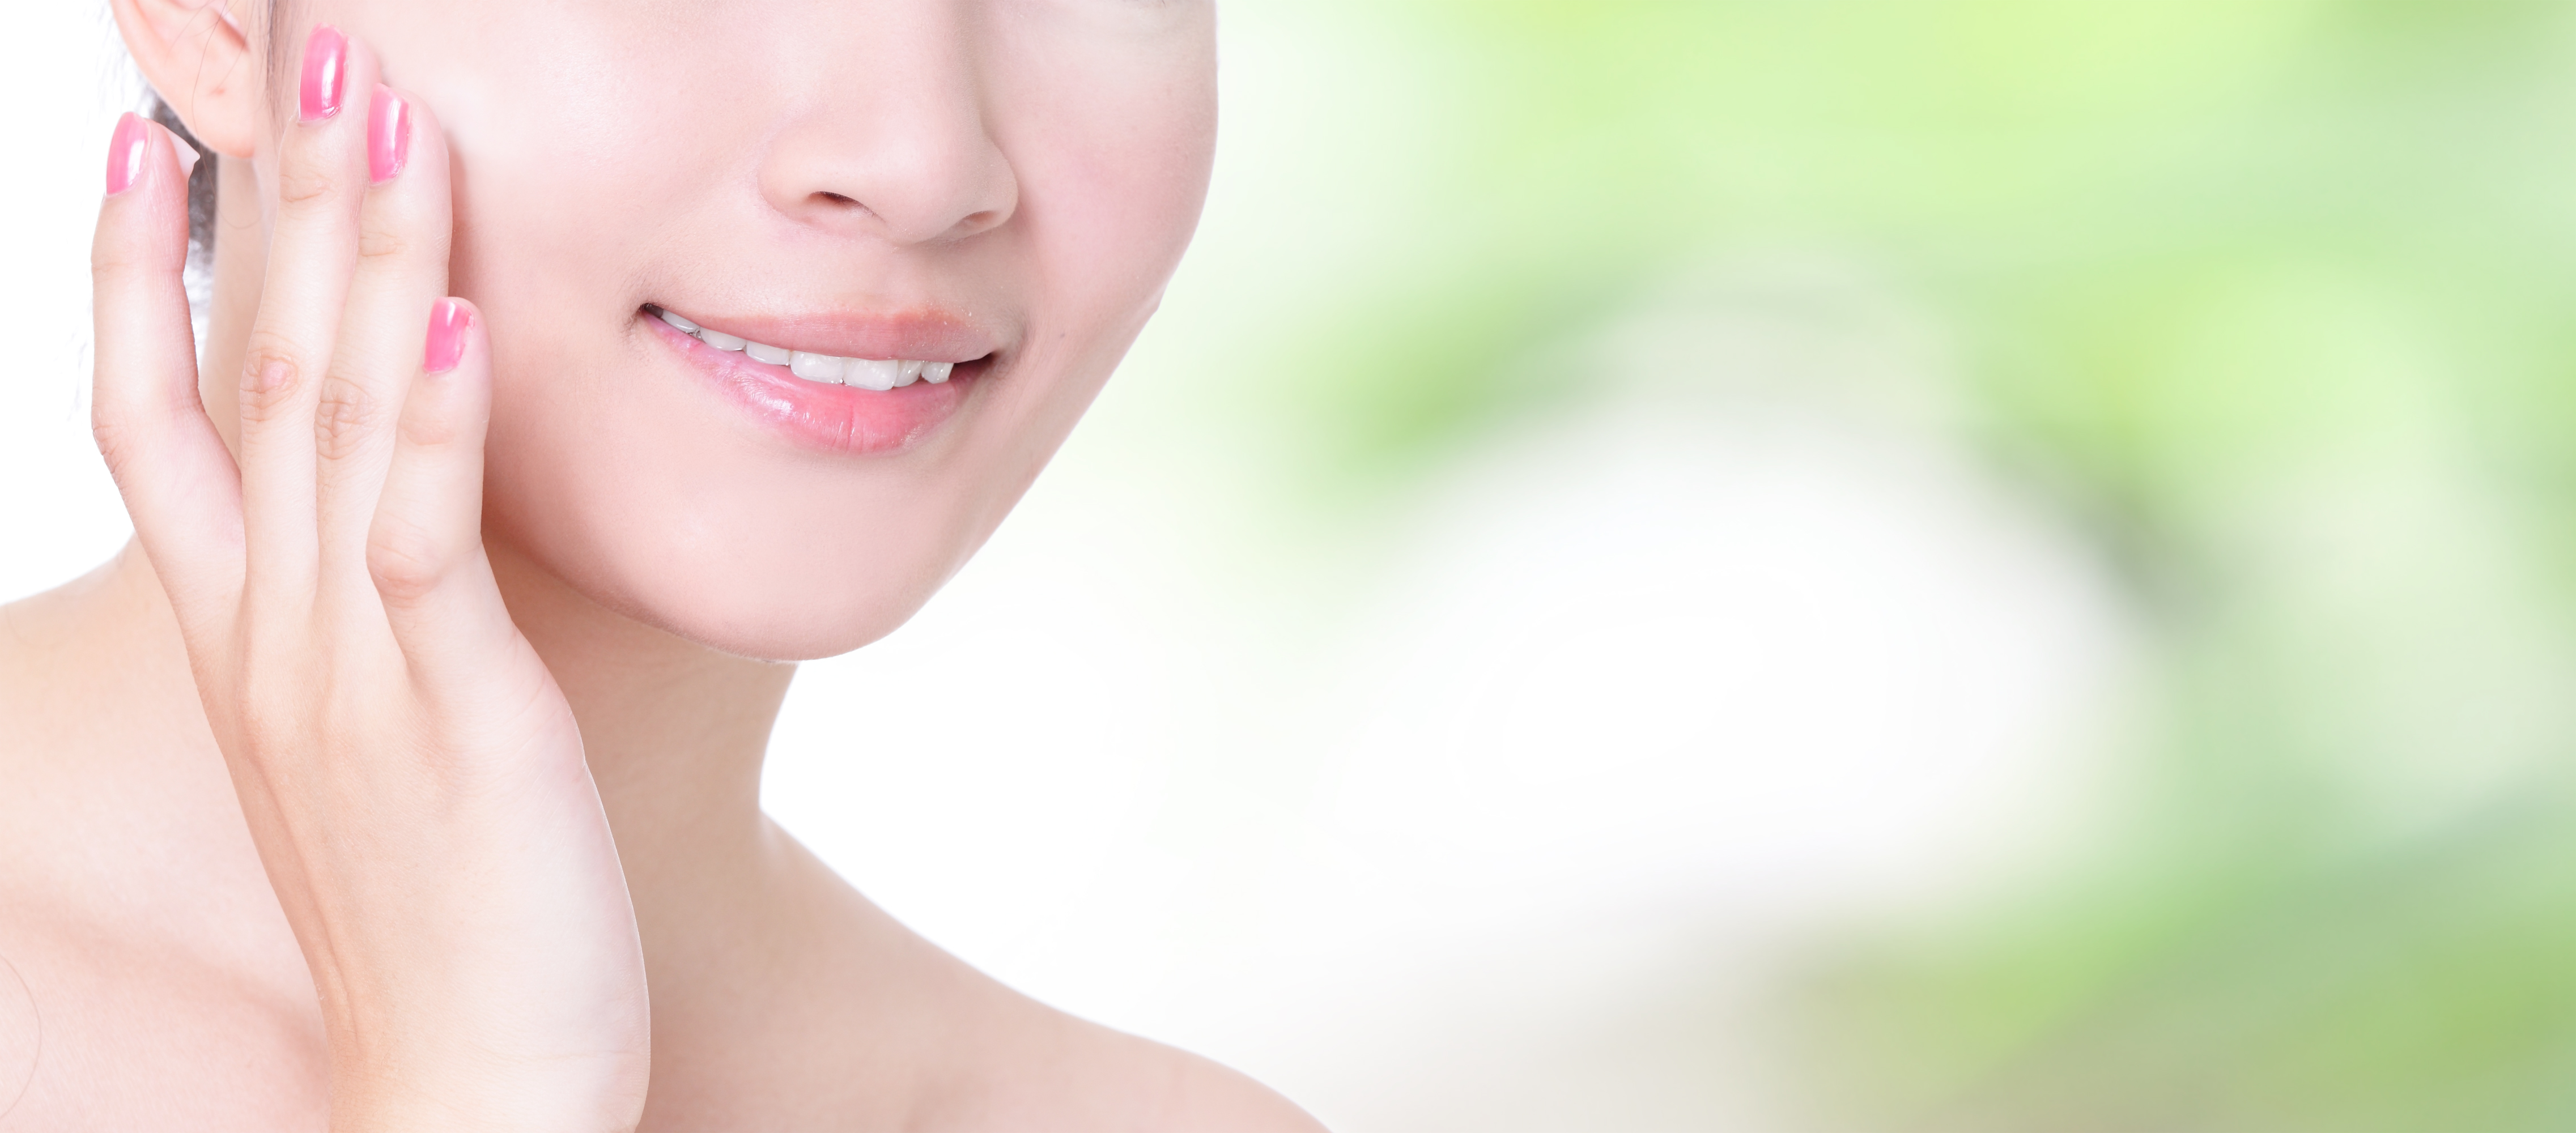 Odontología integral: Servicios de Clínica Dental Irudent